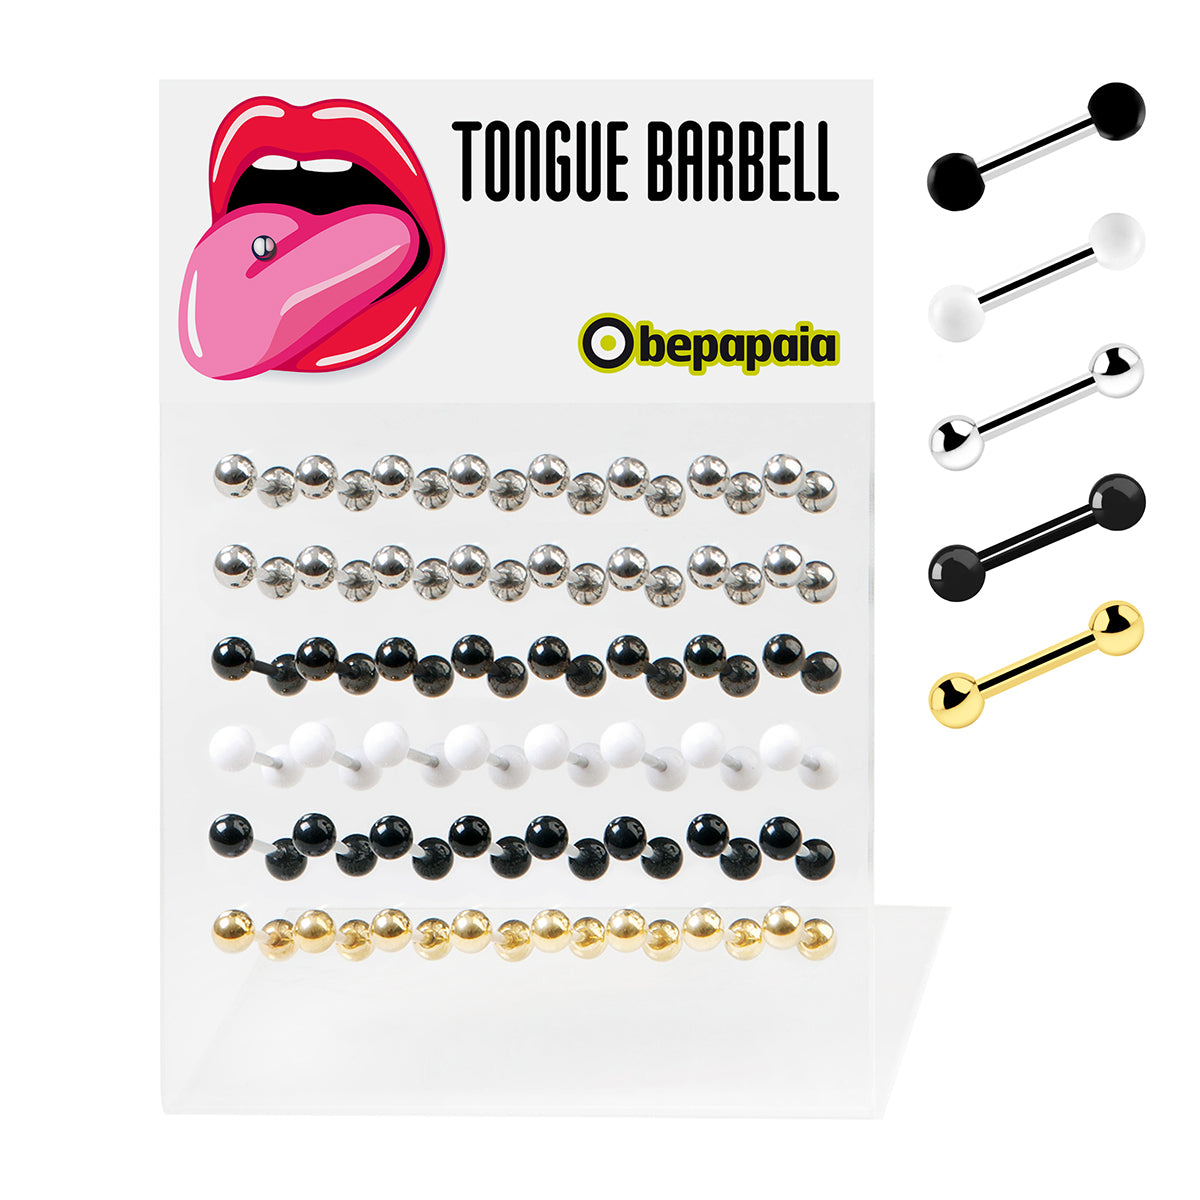 Tongue barbell plain colours